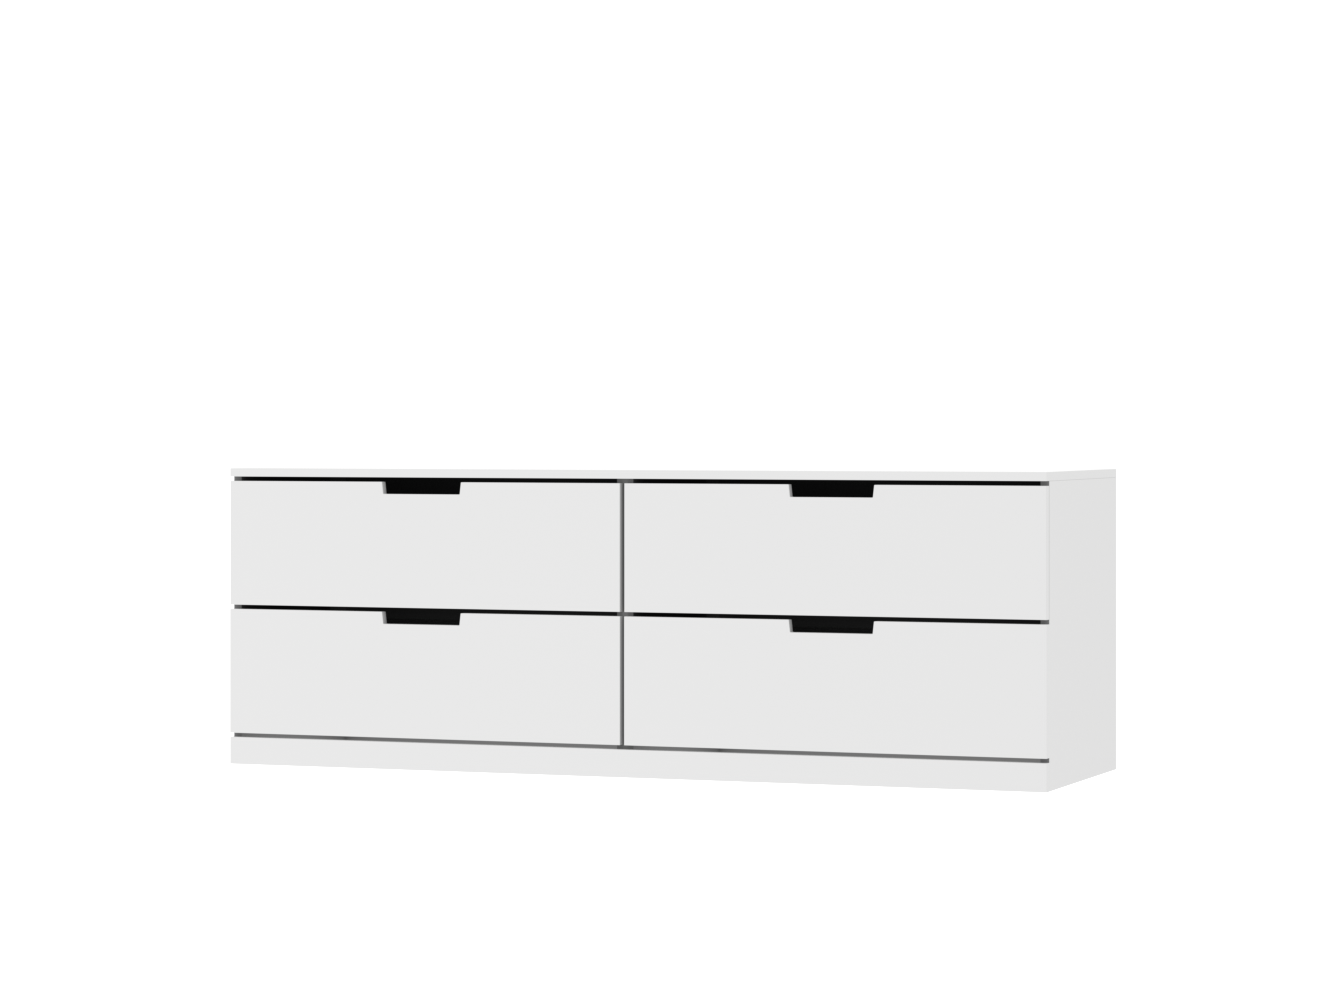 Изображение товара Комод Нордли 22 white ИКЕА (IKEA), 160x45x54 см на сайте adeta.ru